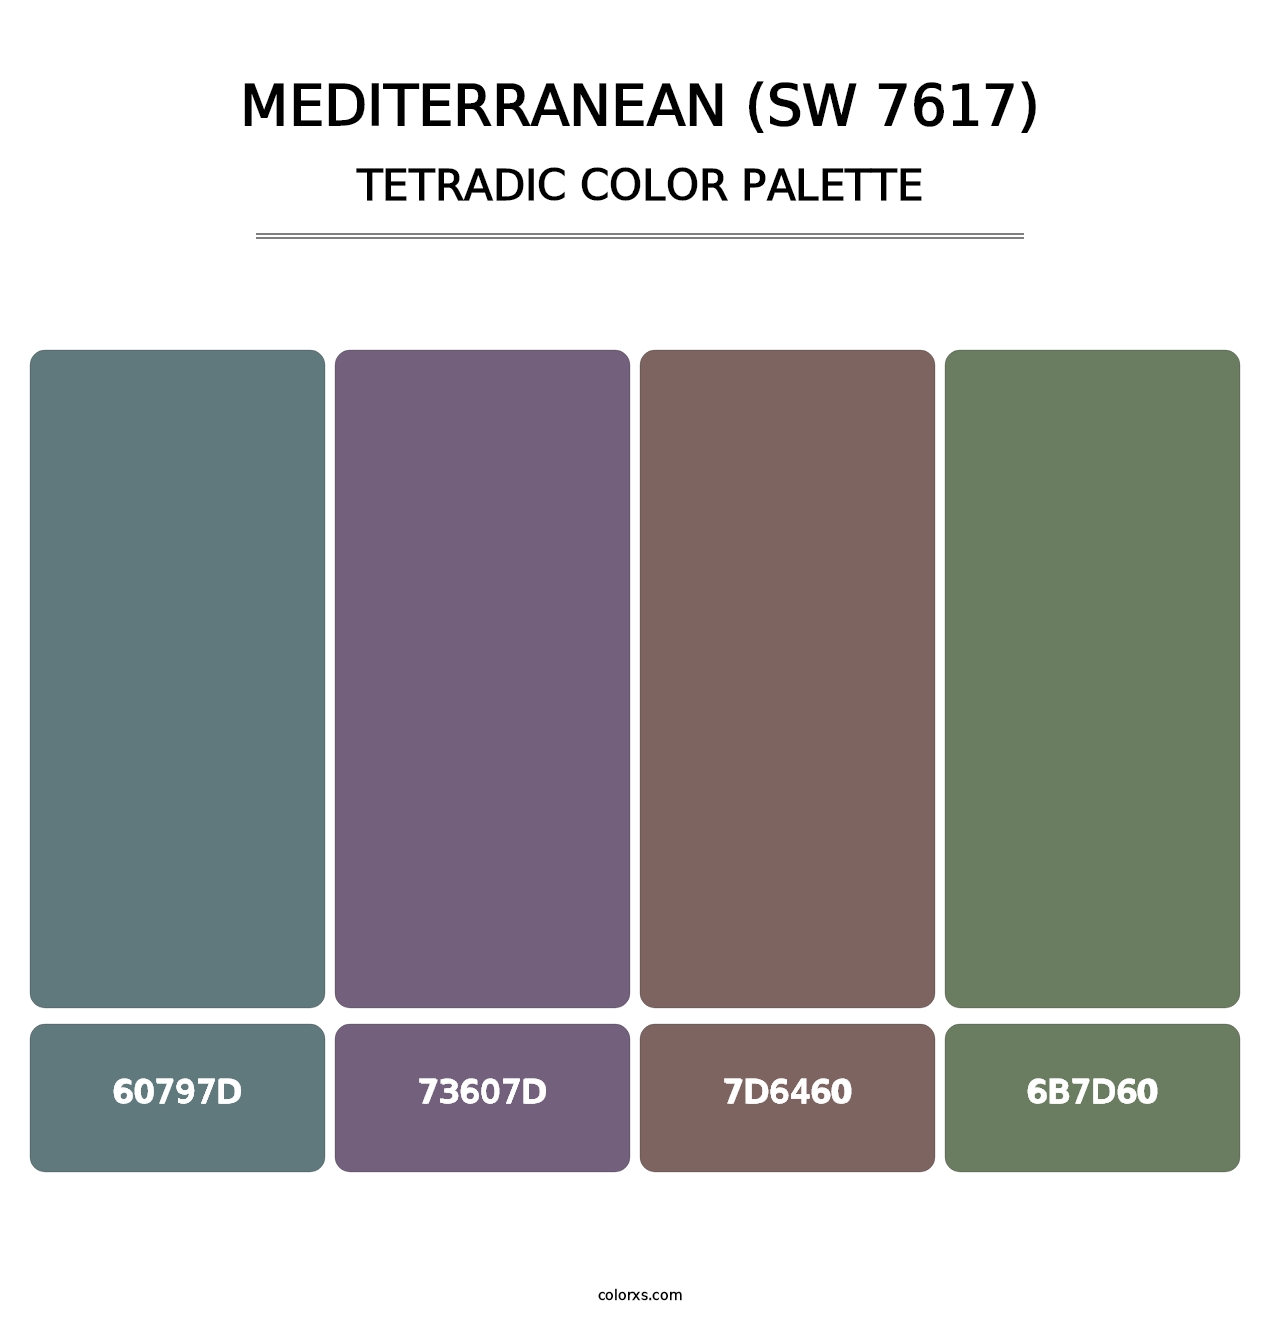 Mediterranean (SW 7617) - Tetradic Color Palette